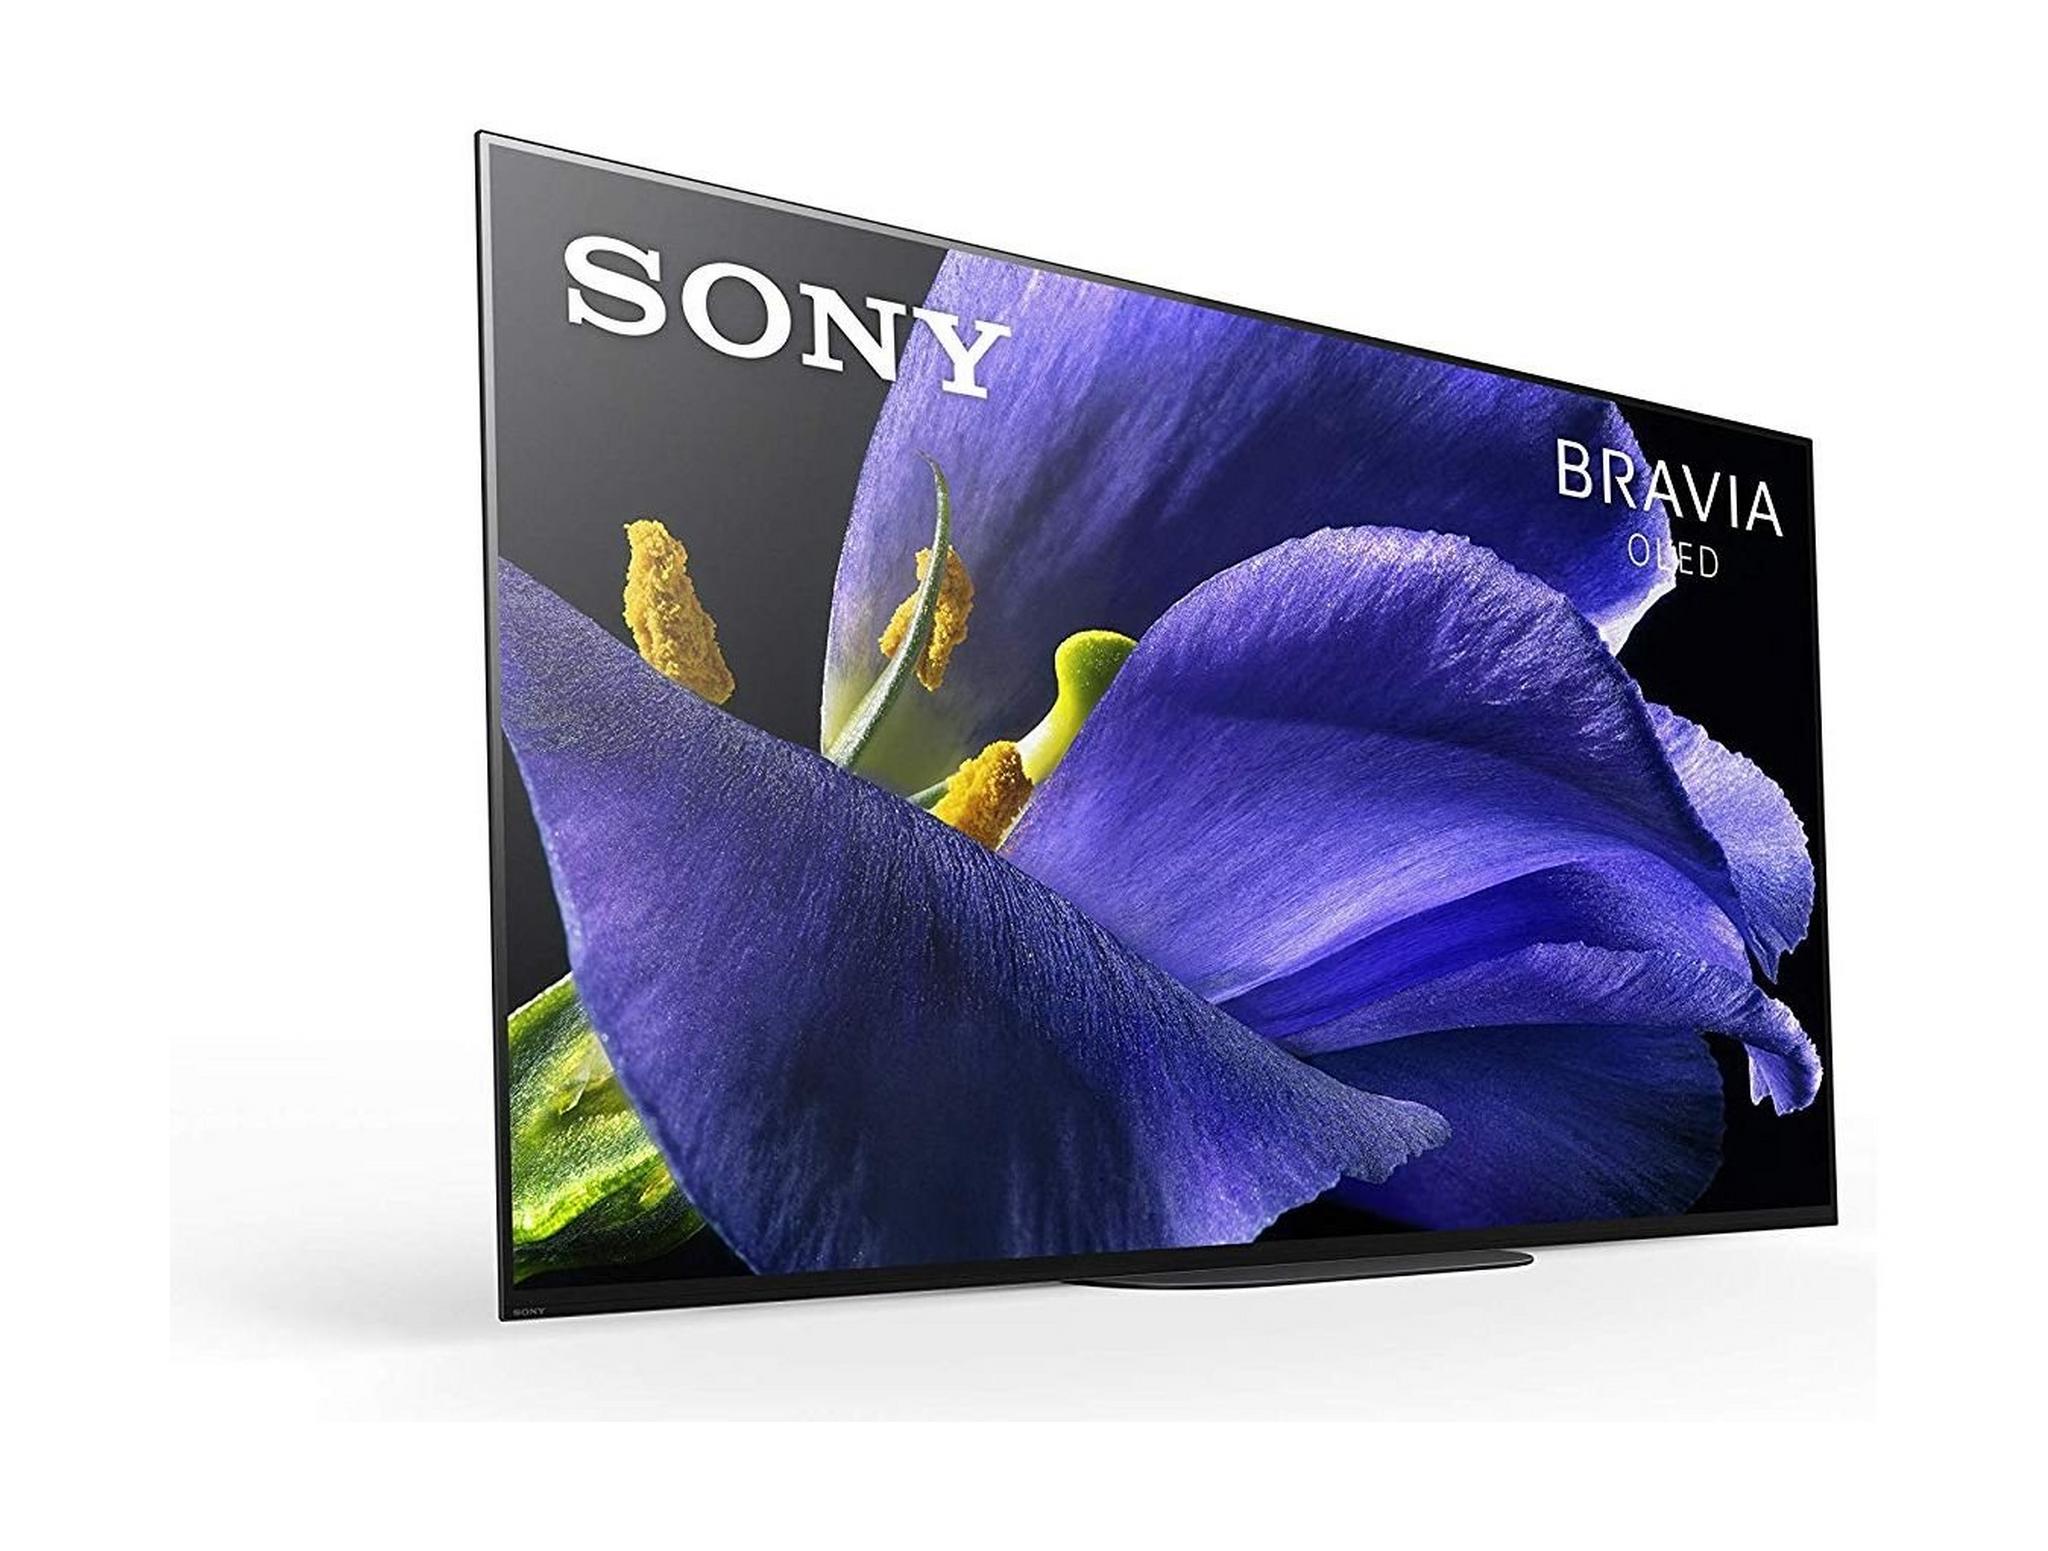 Sony TV A9G 65-inch 4K Ultra HD Smart LED - KD-65A9G